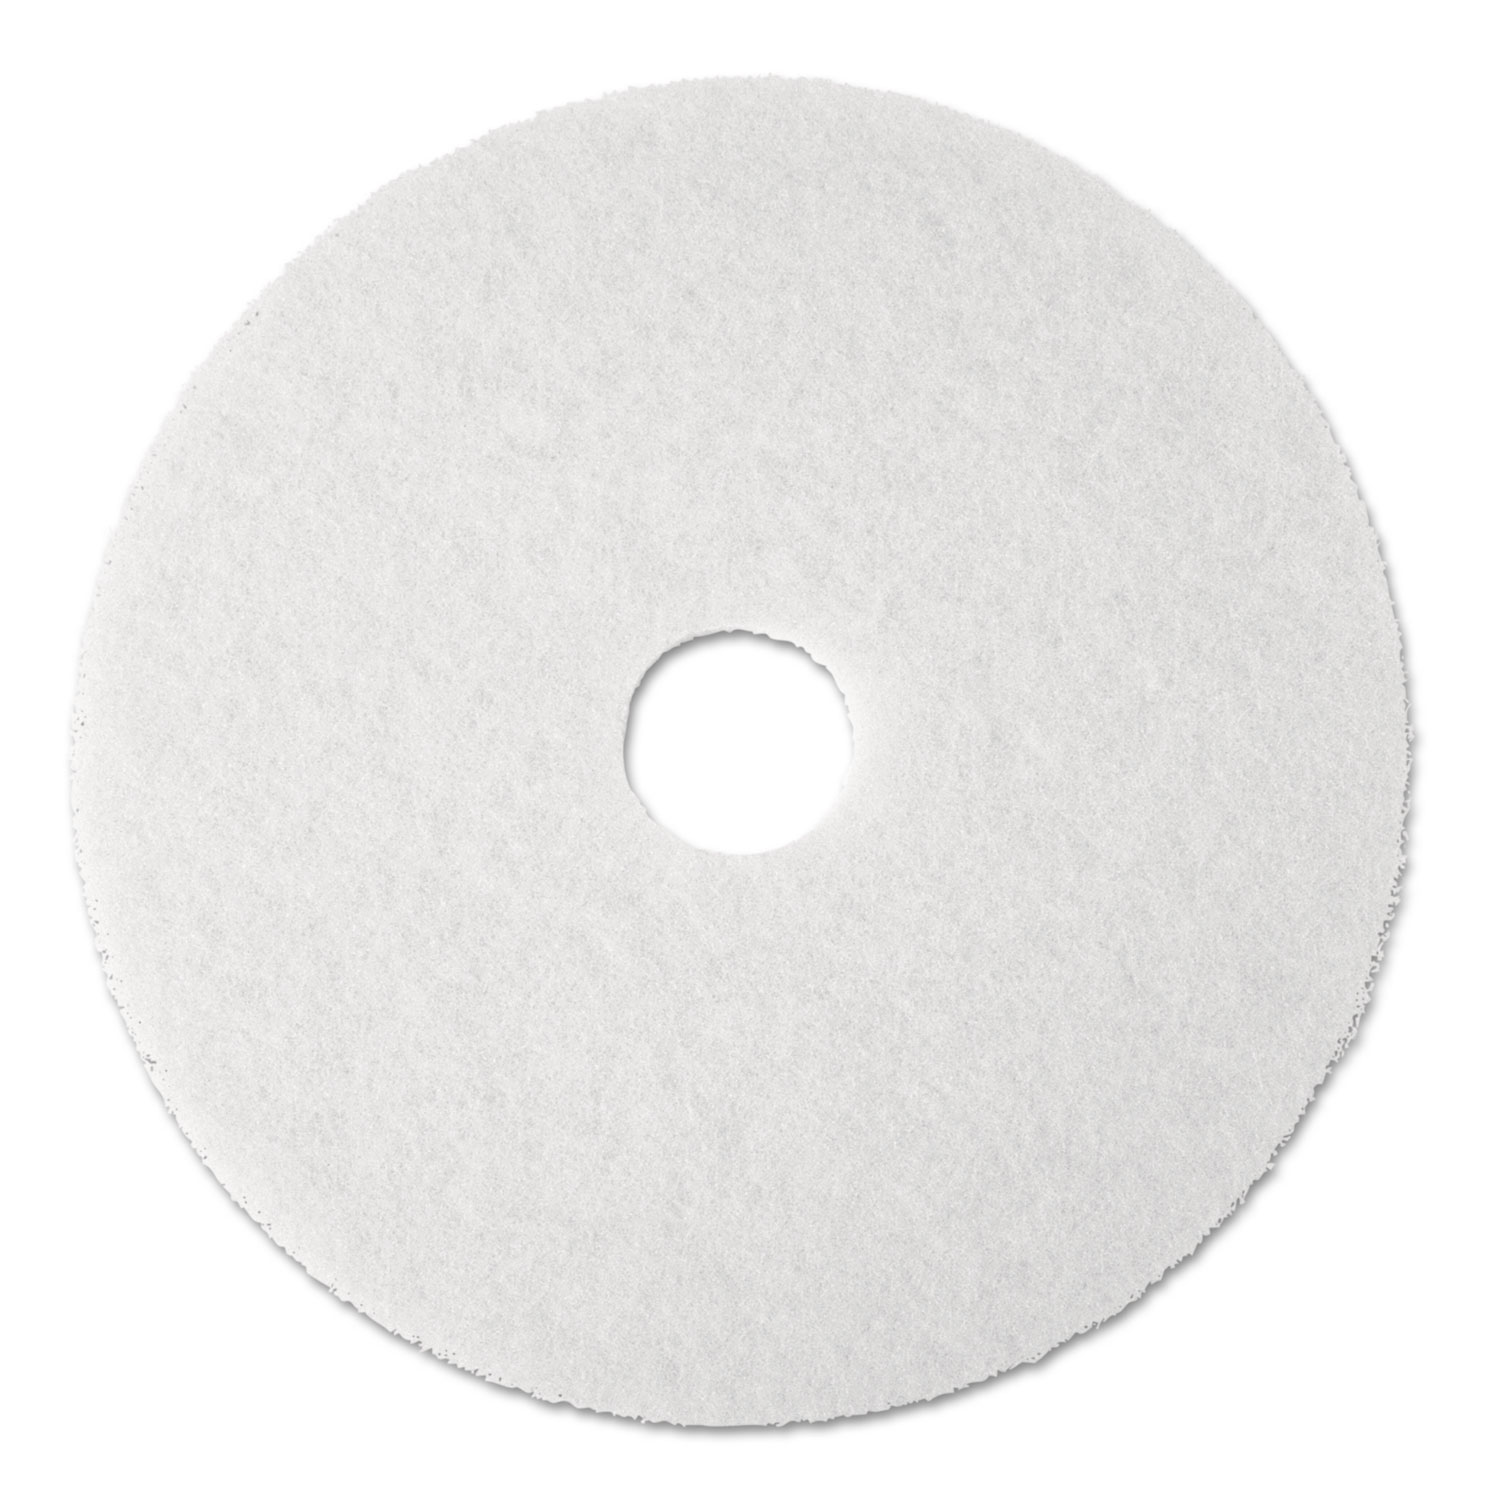  3M 4100 Super Polish Floor Pad 4100, 17 Diameter, White, 5/Carton (MMM08481) 